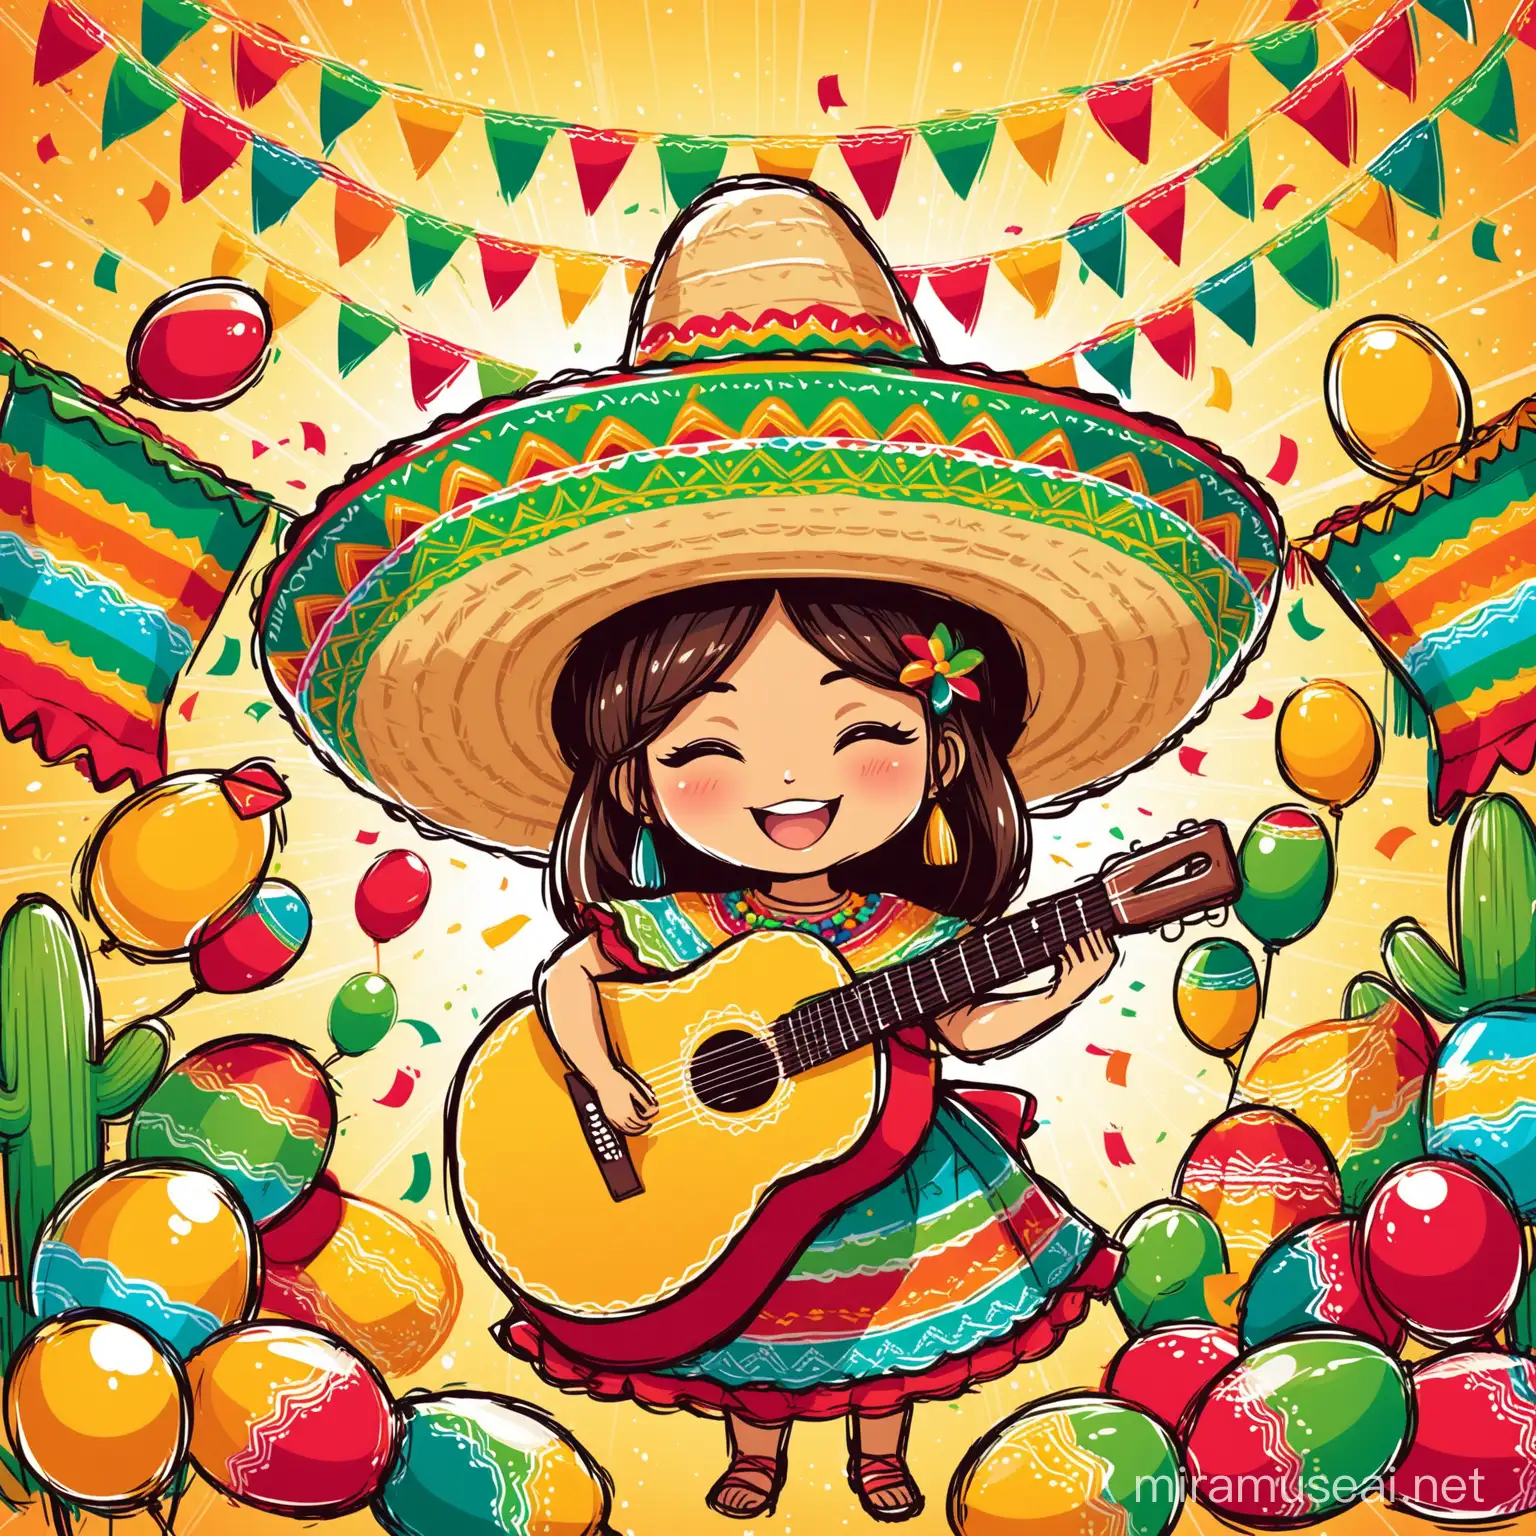 Cinco de Mayo Celebration Vibrant Sombrero Hat with Mariachi Accents